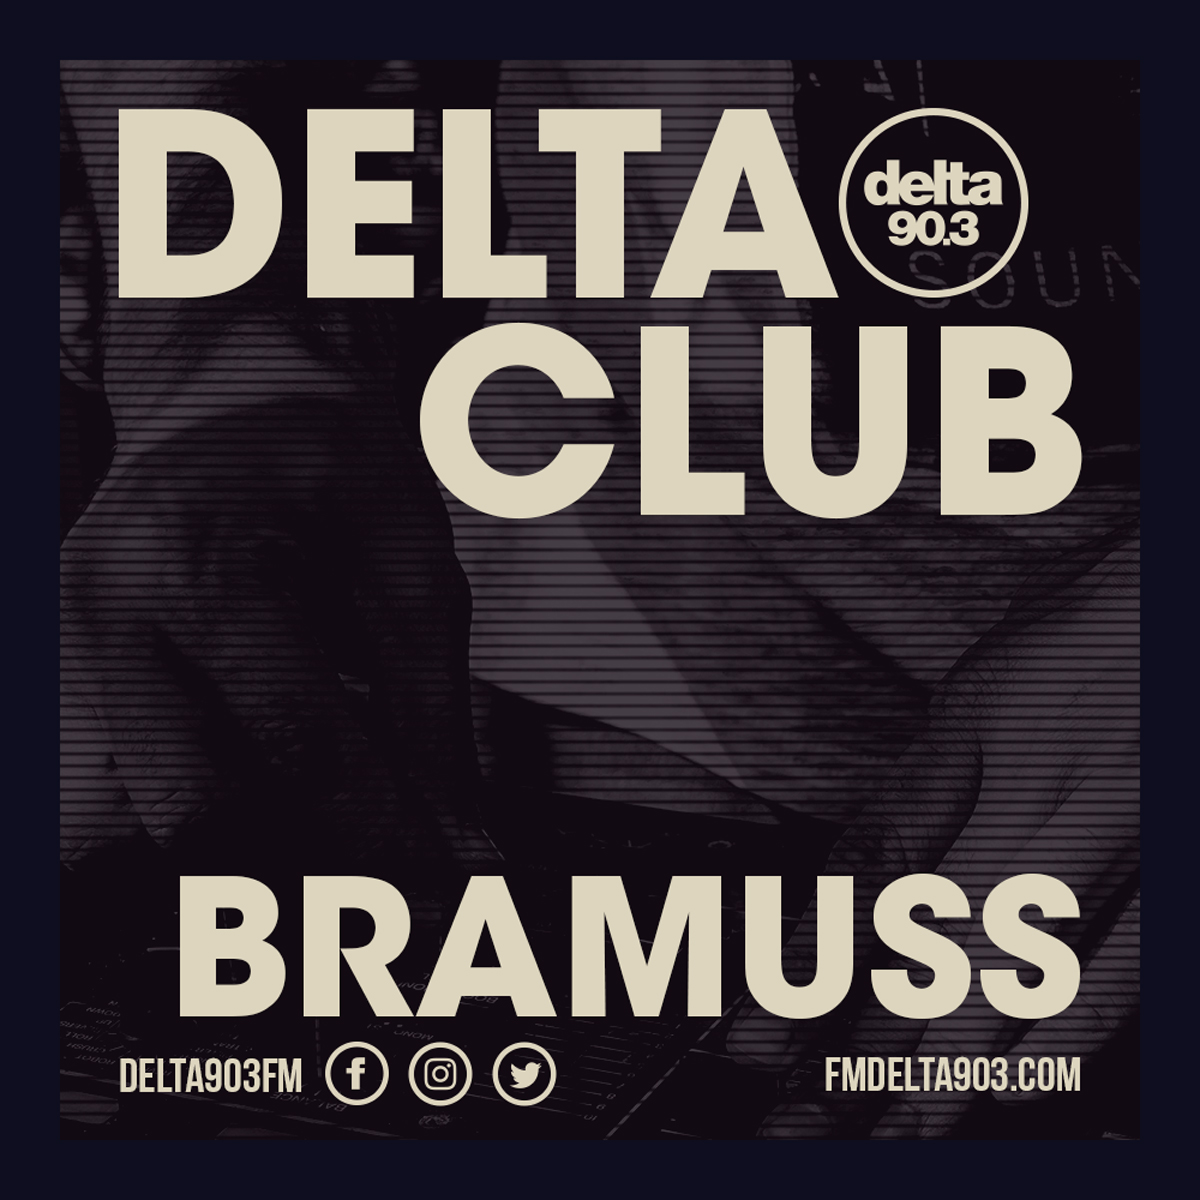 Delta Podcasts - Delta Club presents Bramuss (28.05.2018)